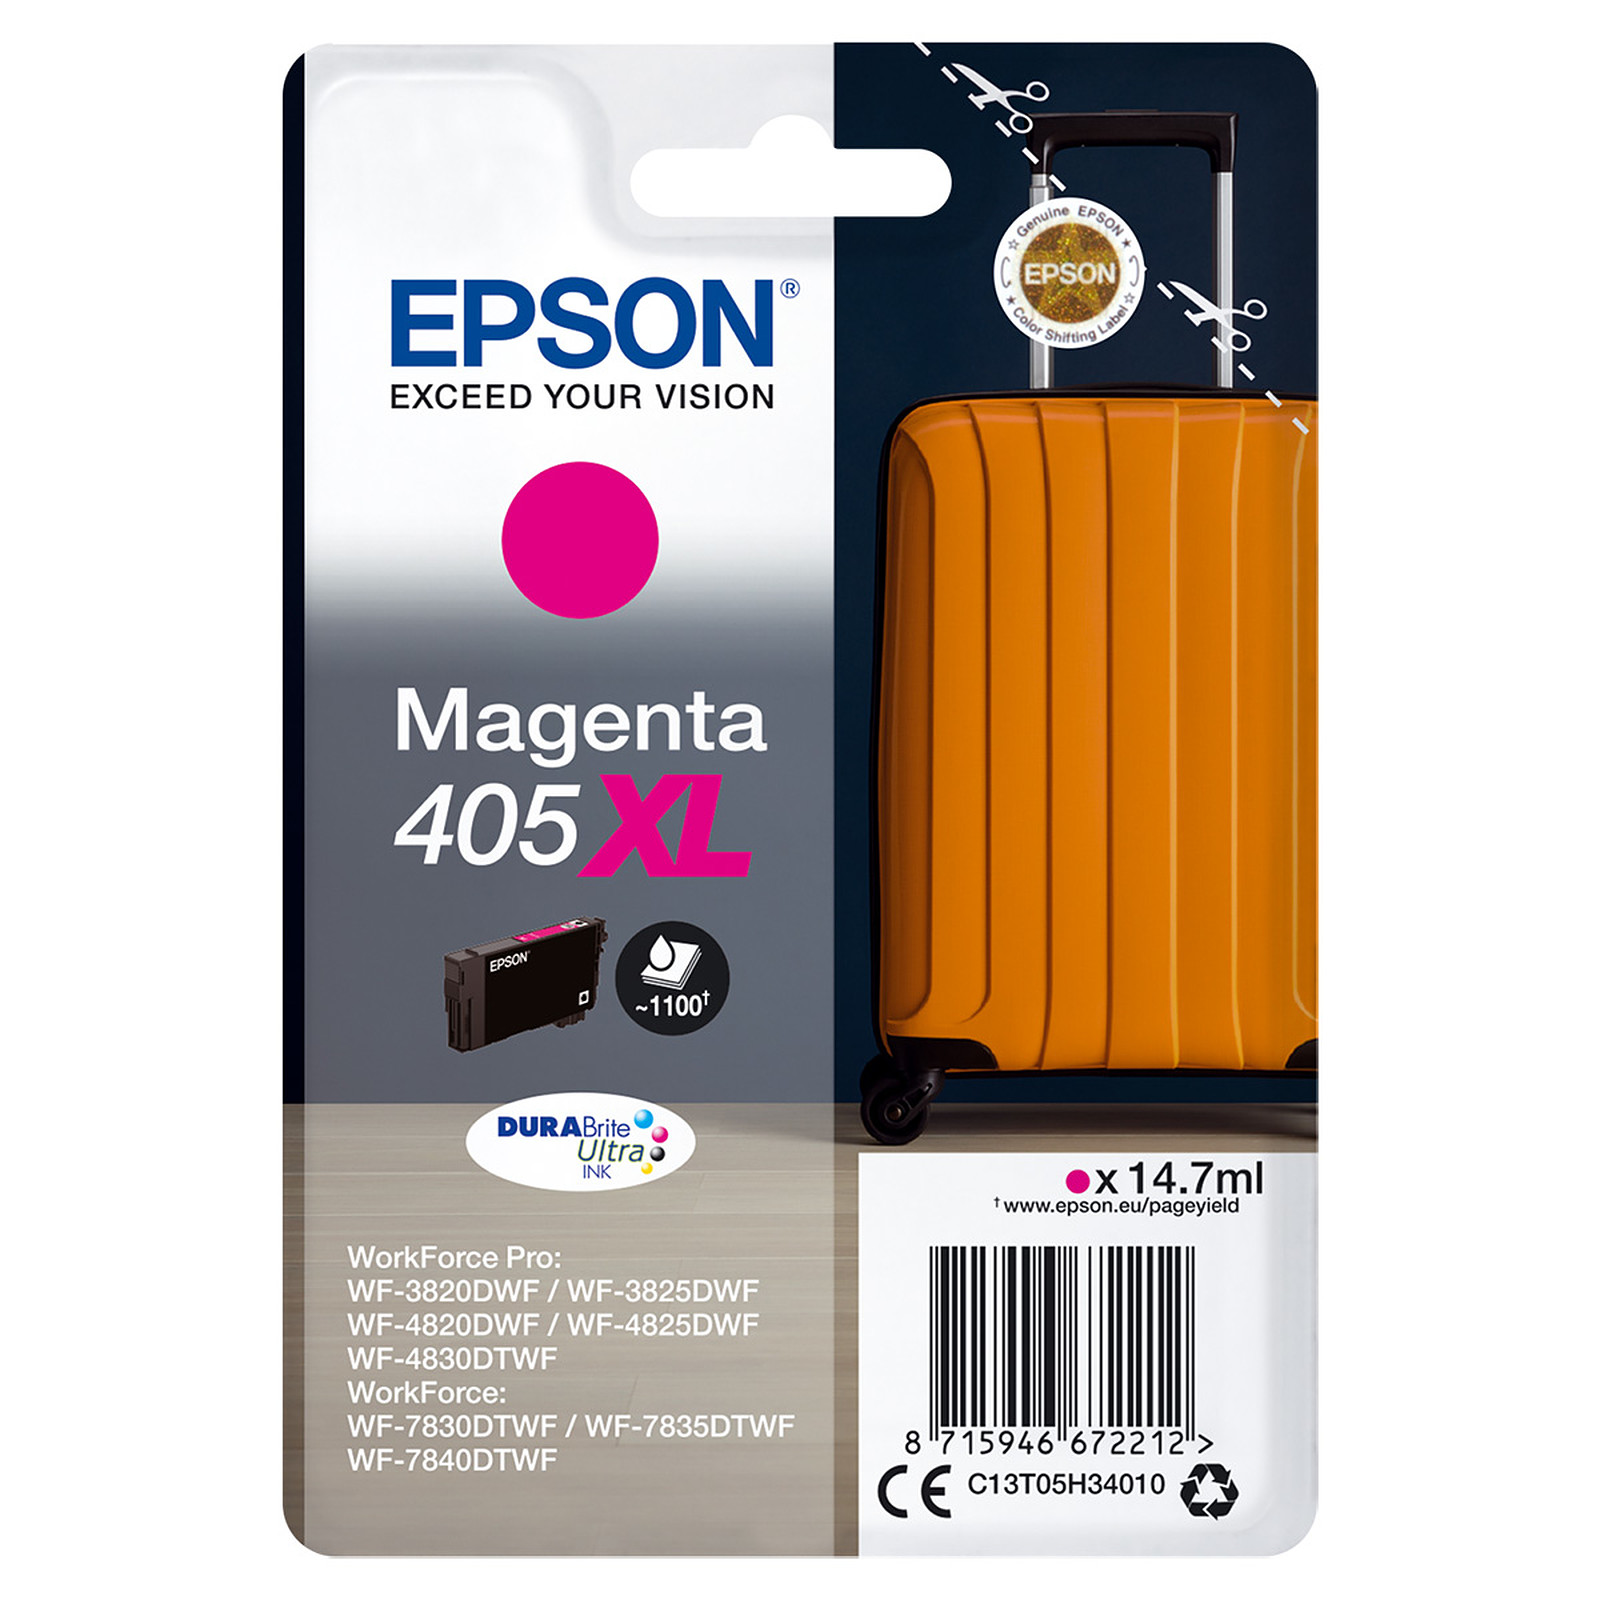 Epson Valise 405XL Magenta - Cartouche imprimante Epson